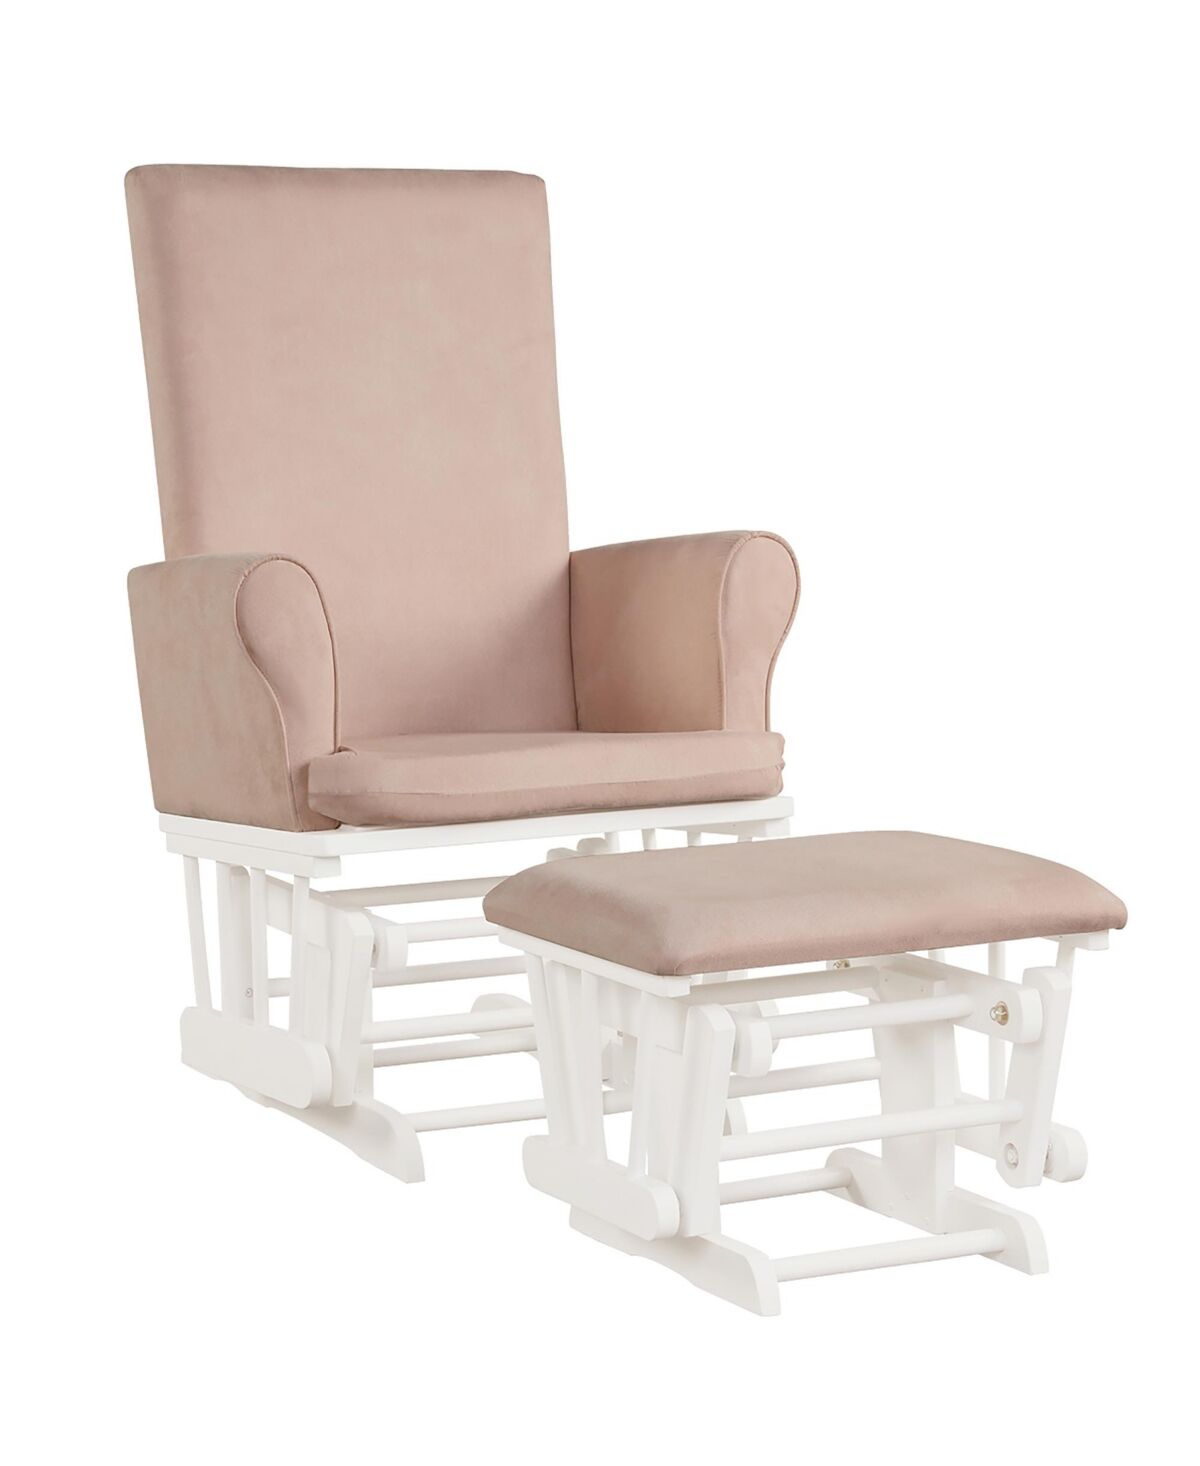 Costway Baby Nursery Relax Rocker Rocking Chair Glider & Ottoman Set w/Cushion - Pink